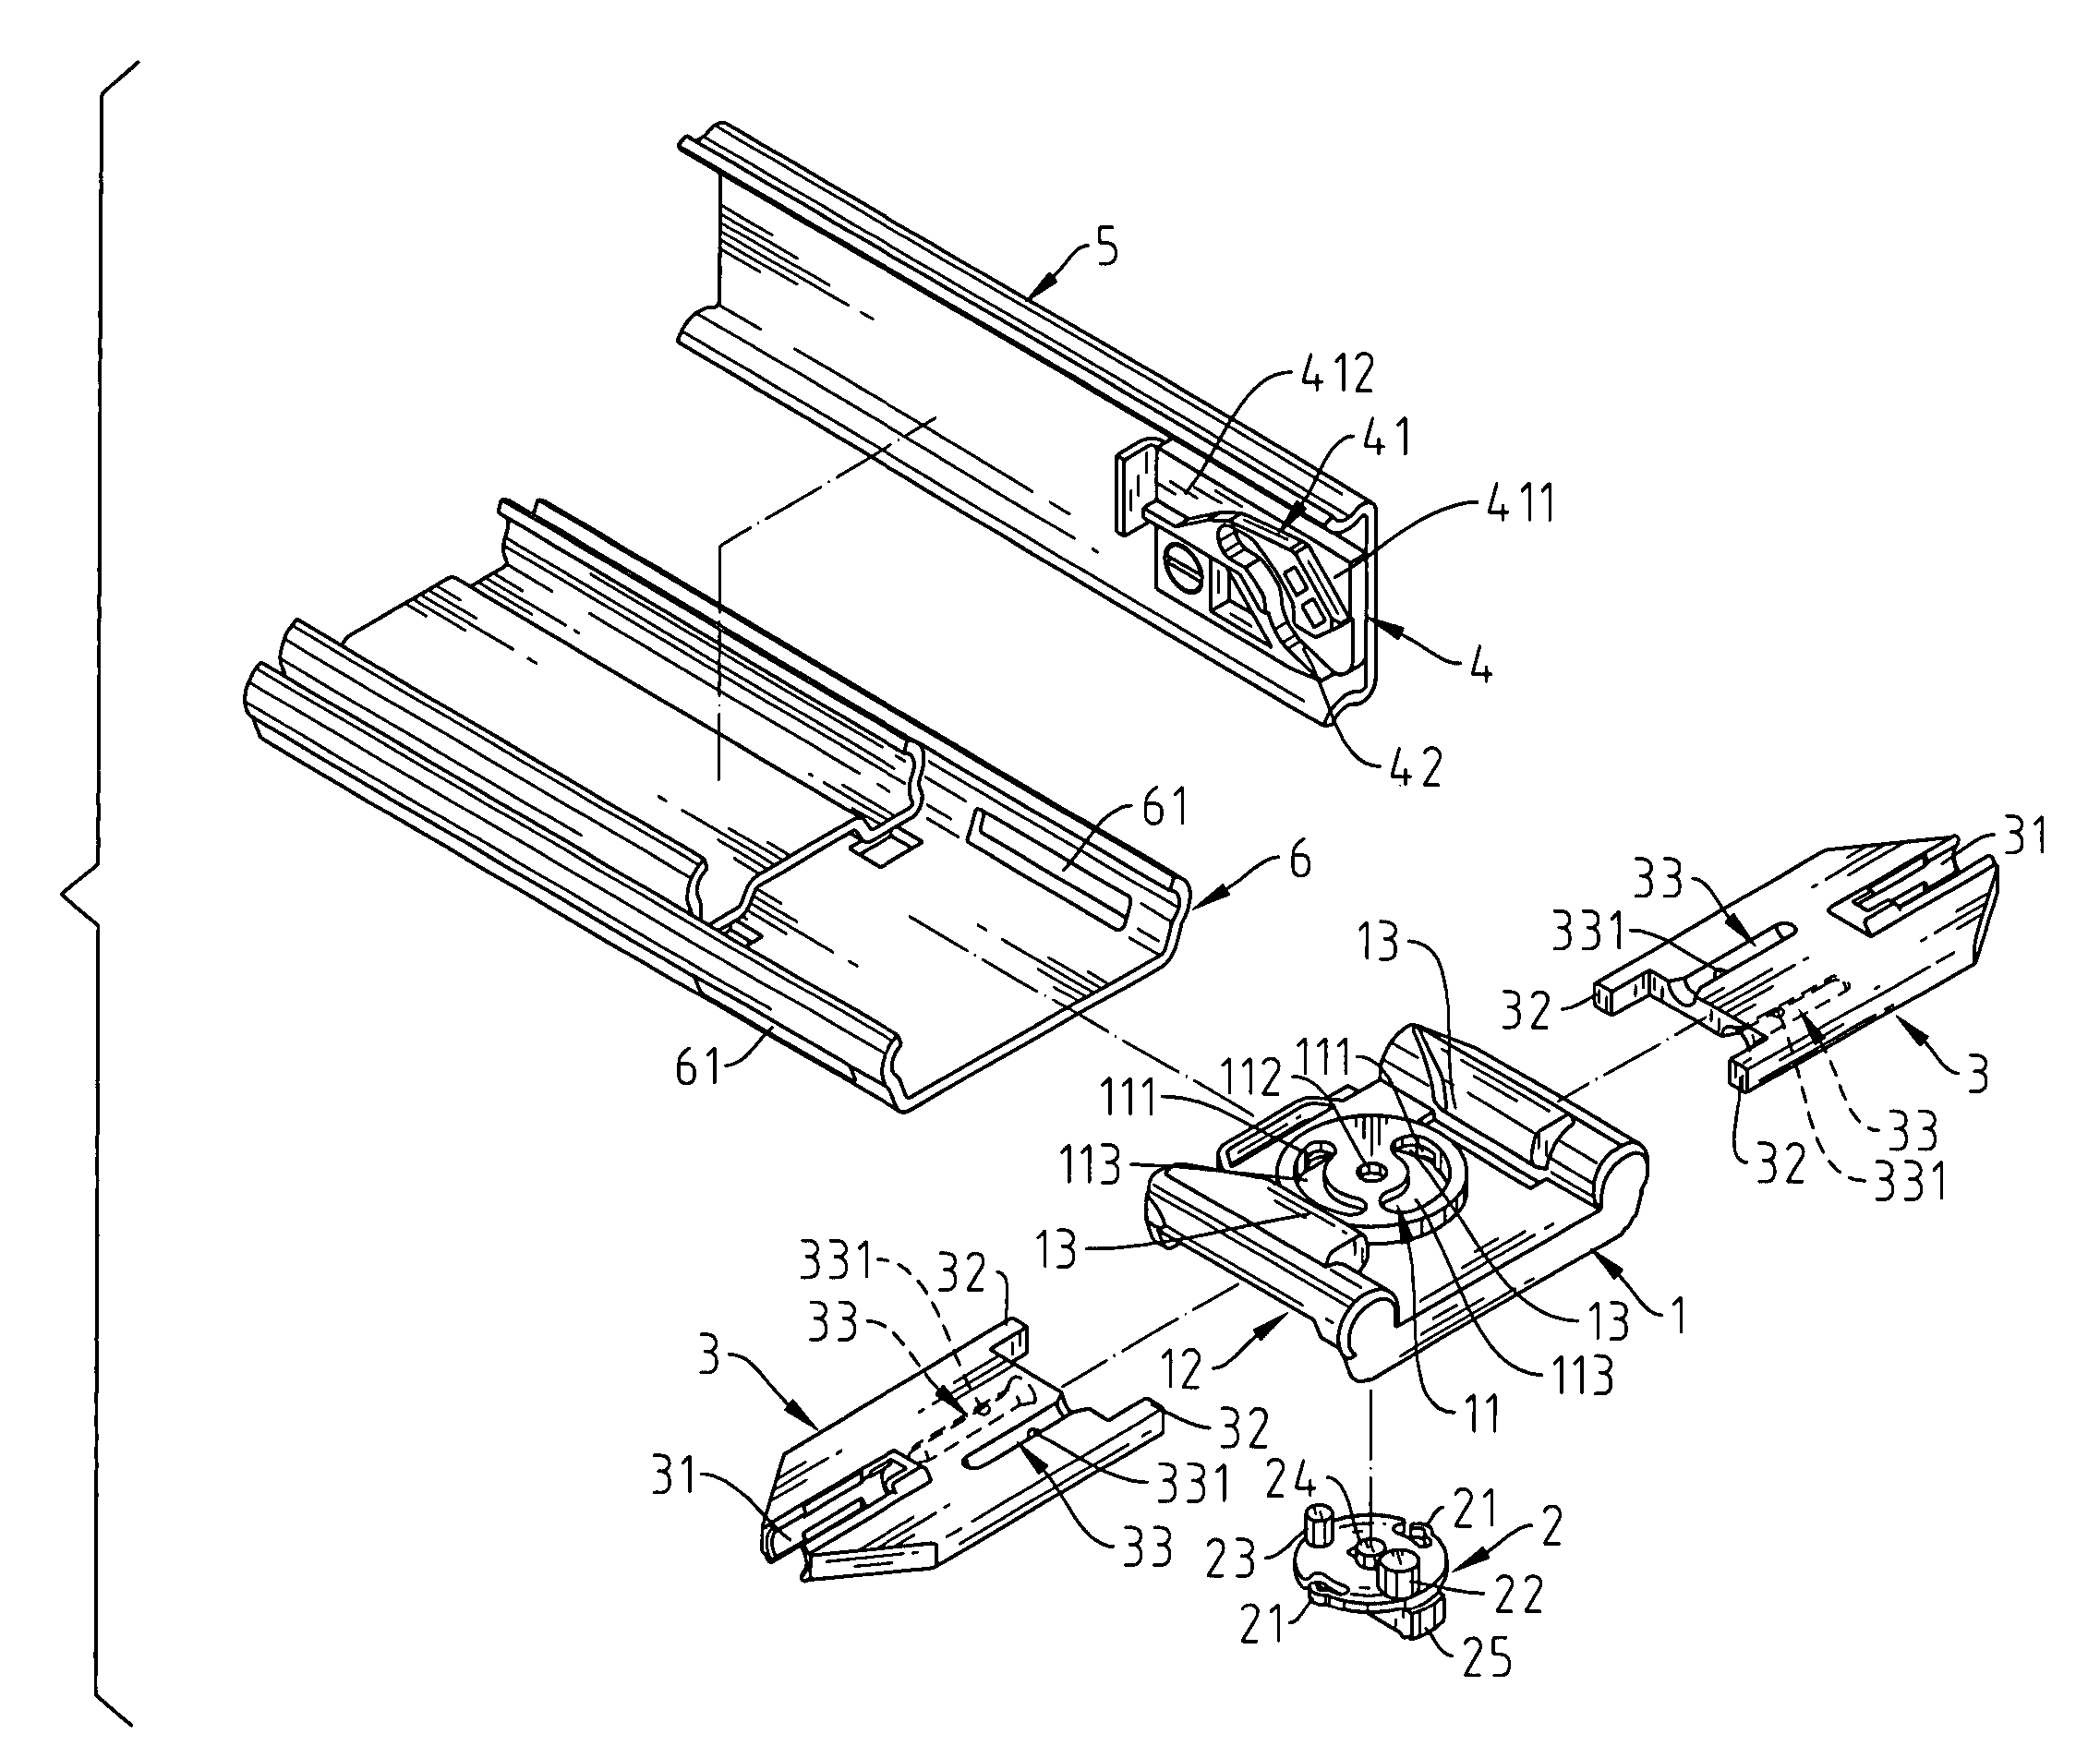 Drawer interlock mechanism